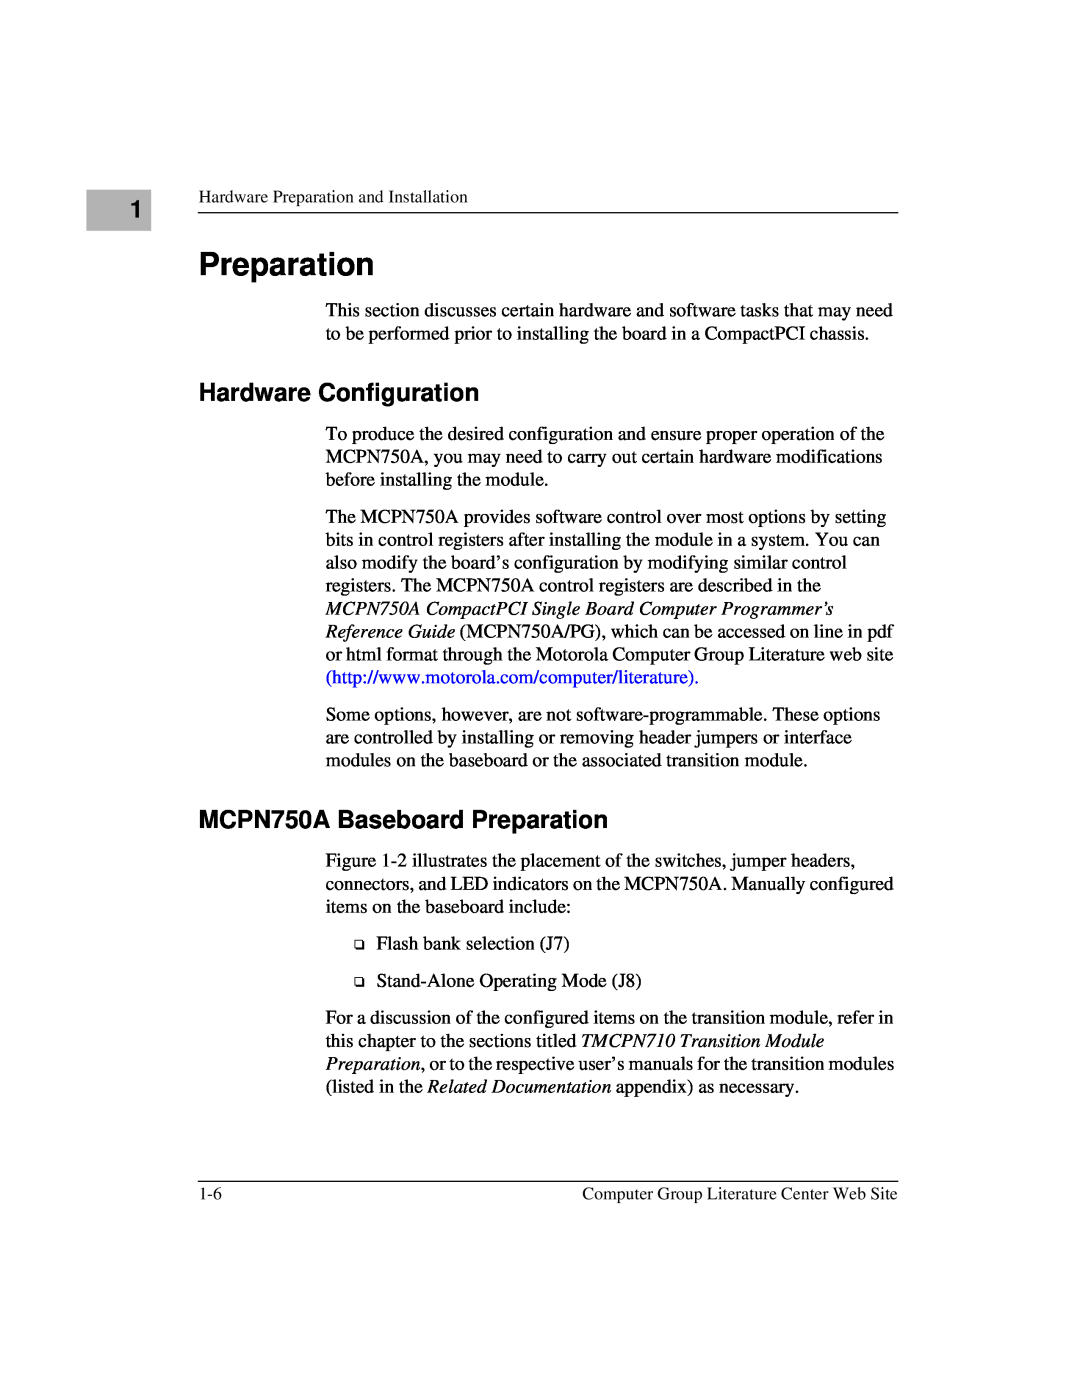 Motorola IH5 manual Hardware Configuration, MCPN750A Baseboard Preparation 